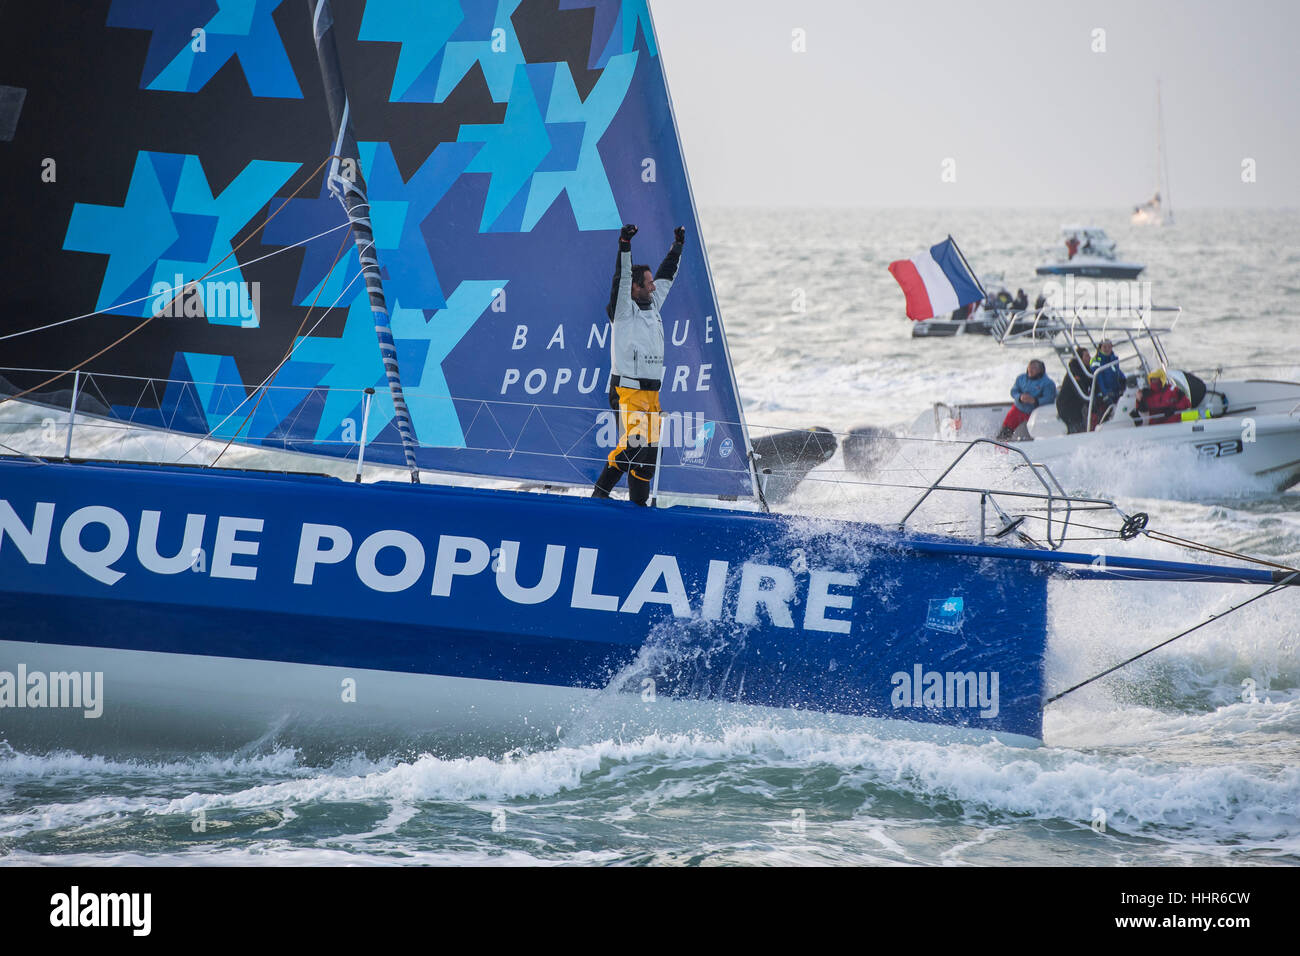 Yacht Race Vendée Globe 2017: Armel Le Cléac'h a bordo della Banque Populaire VIII monohull vela (2017/01/19) Foto Stock